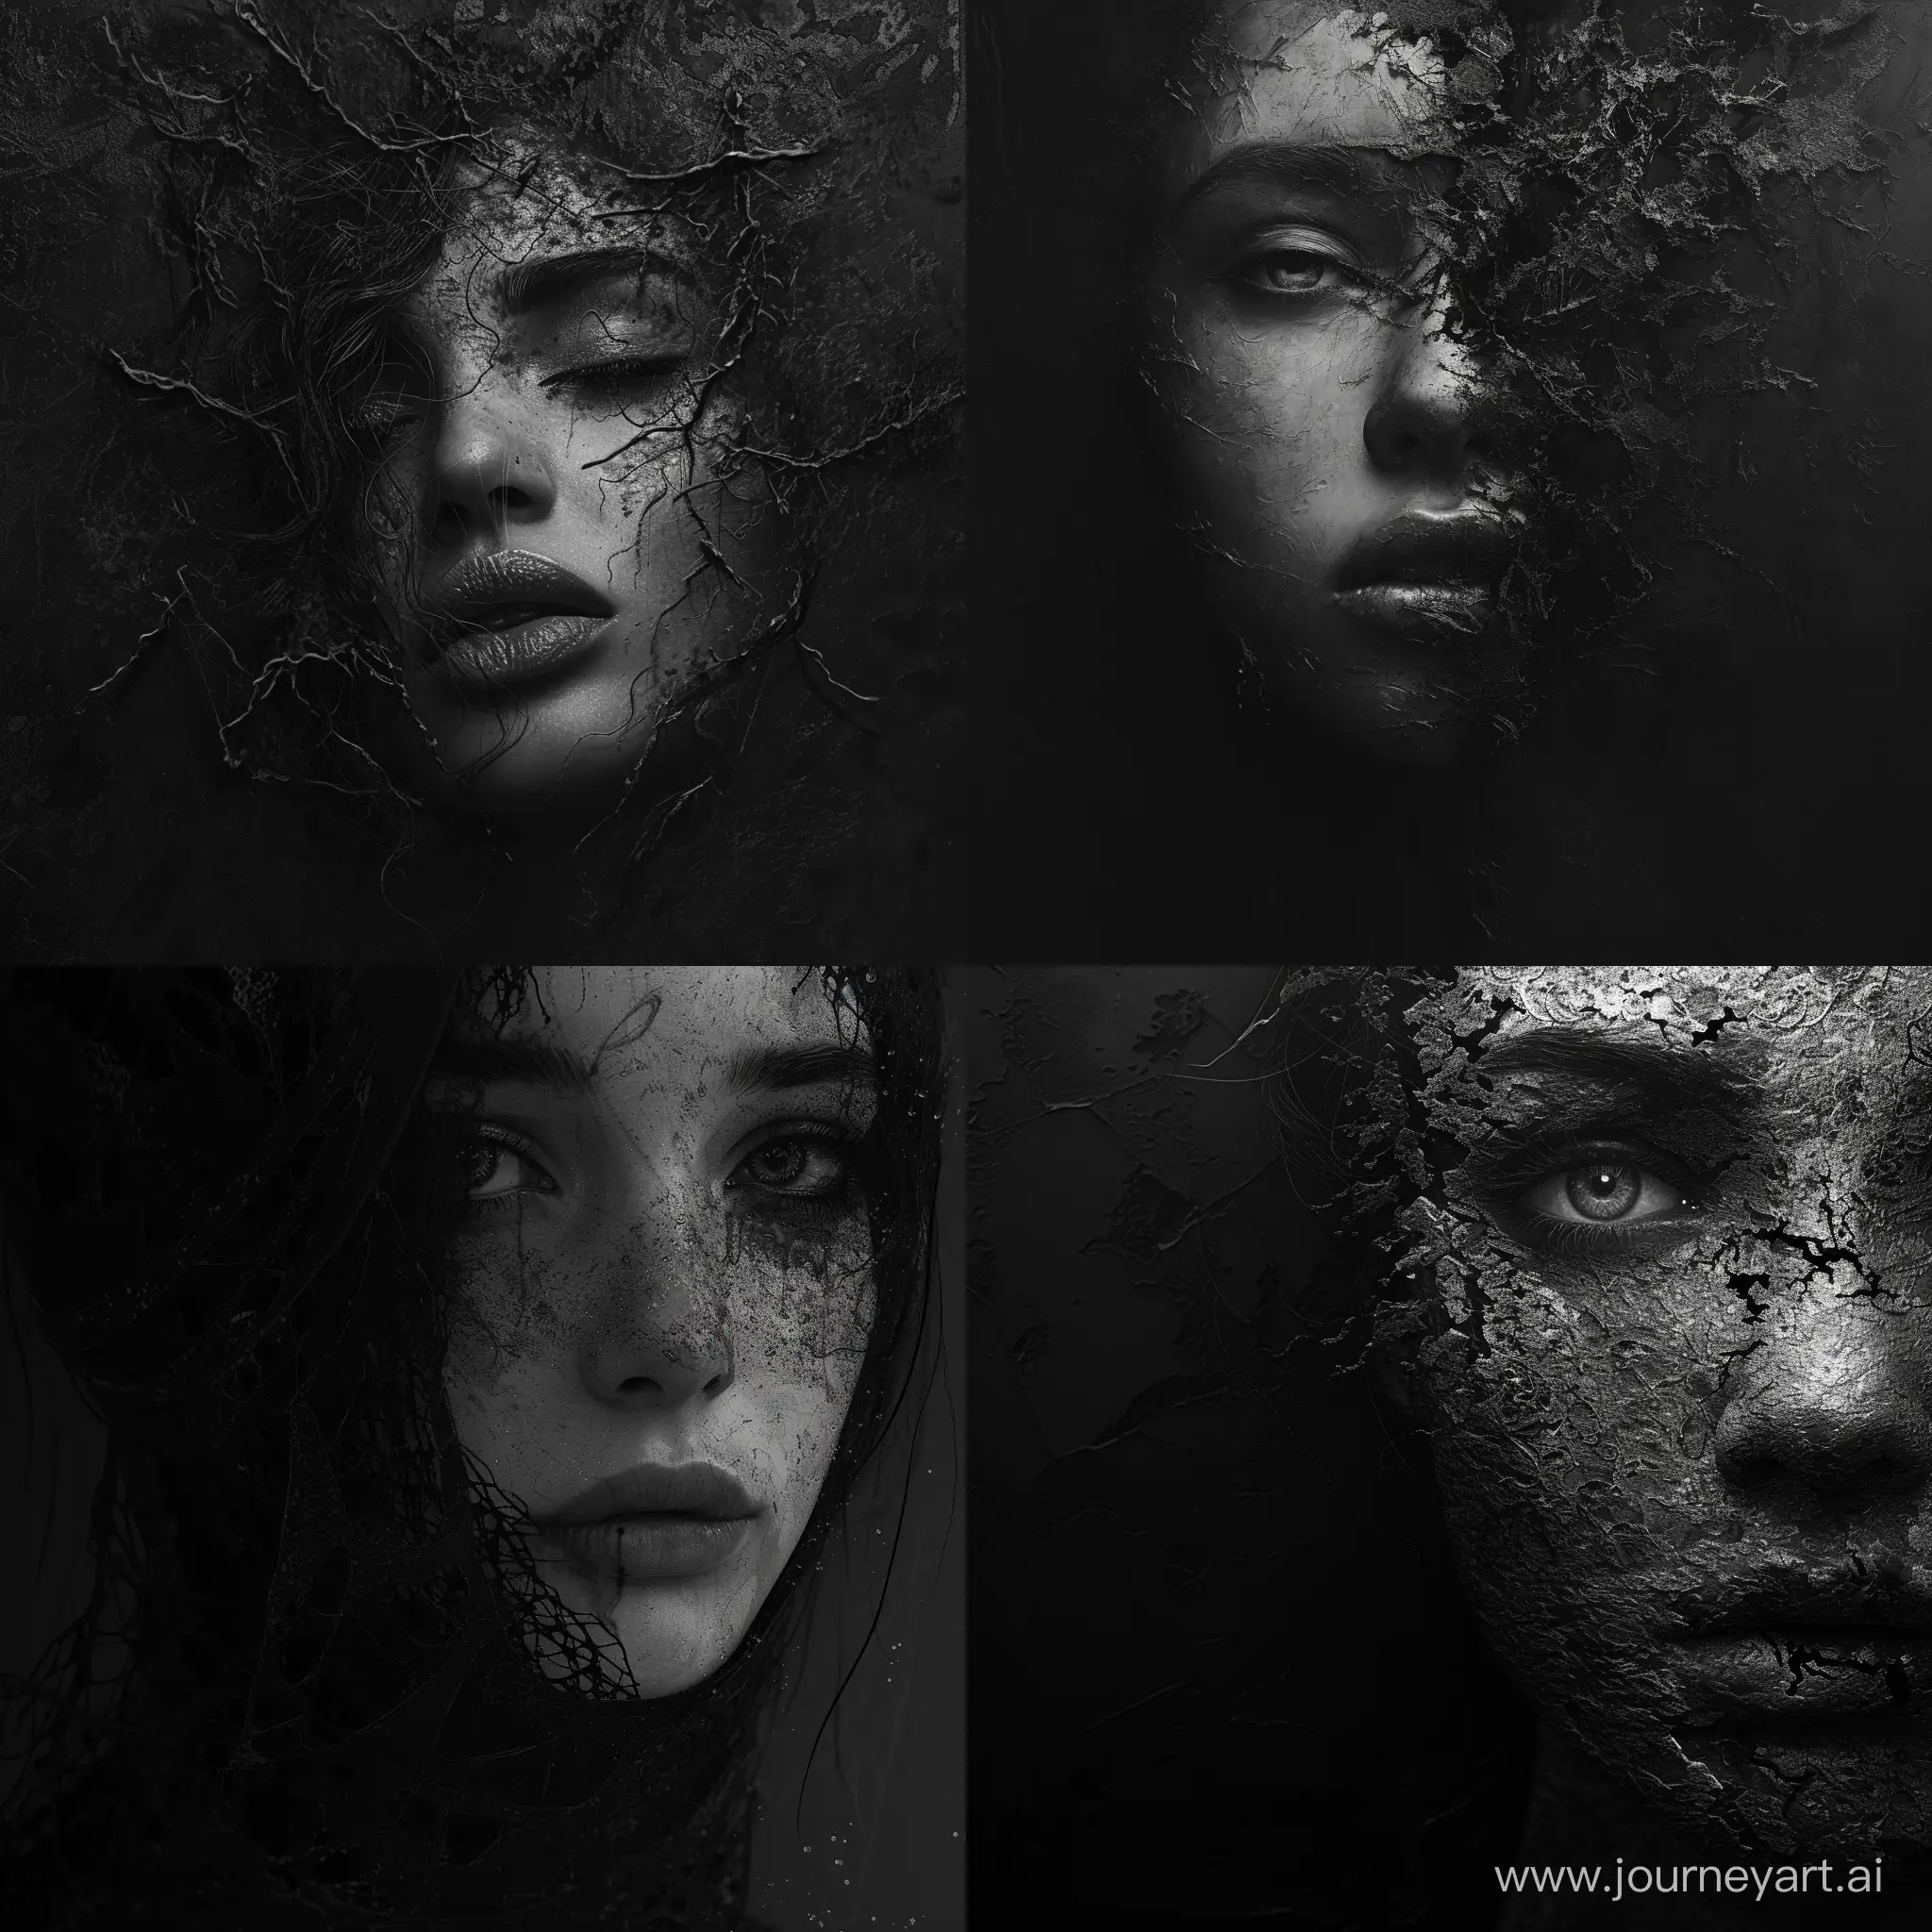 Emotional-Surrealism-Dark-and-Moody-Portrait-Illustration-in-Januz-Miralles-Style